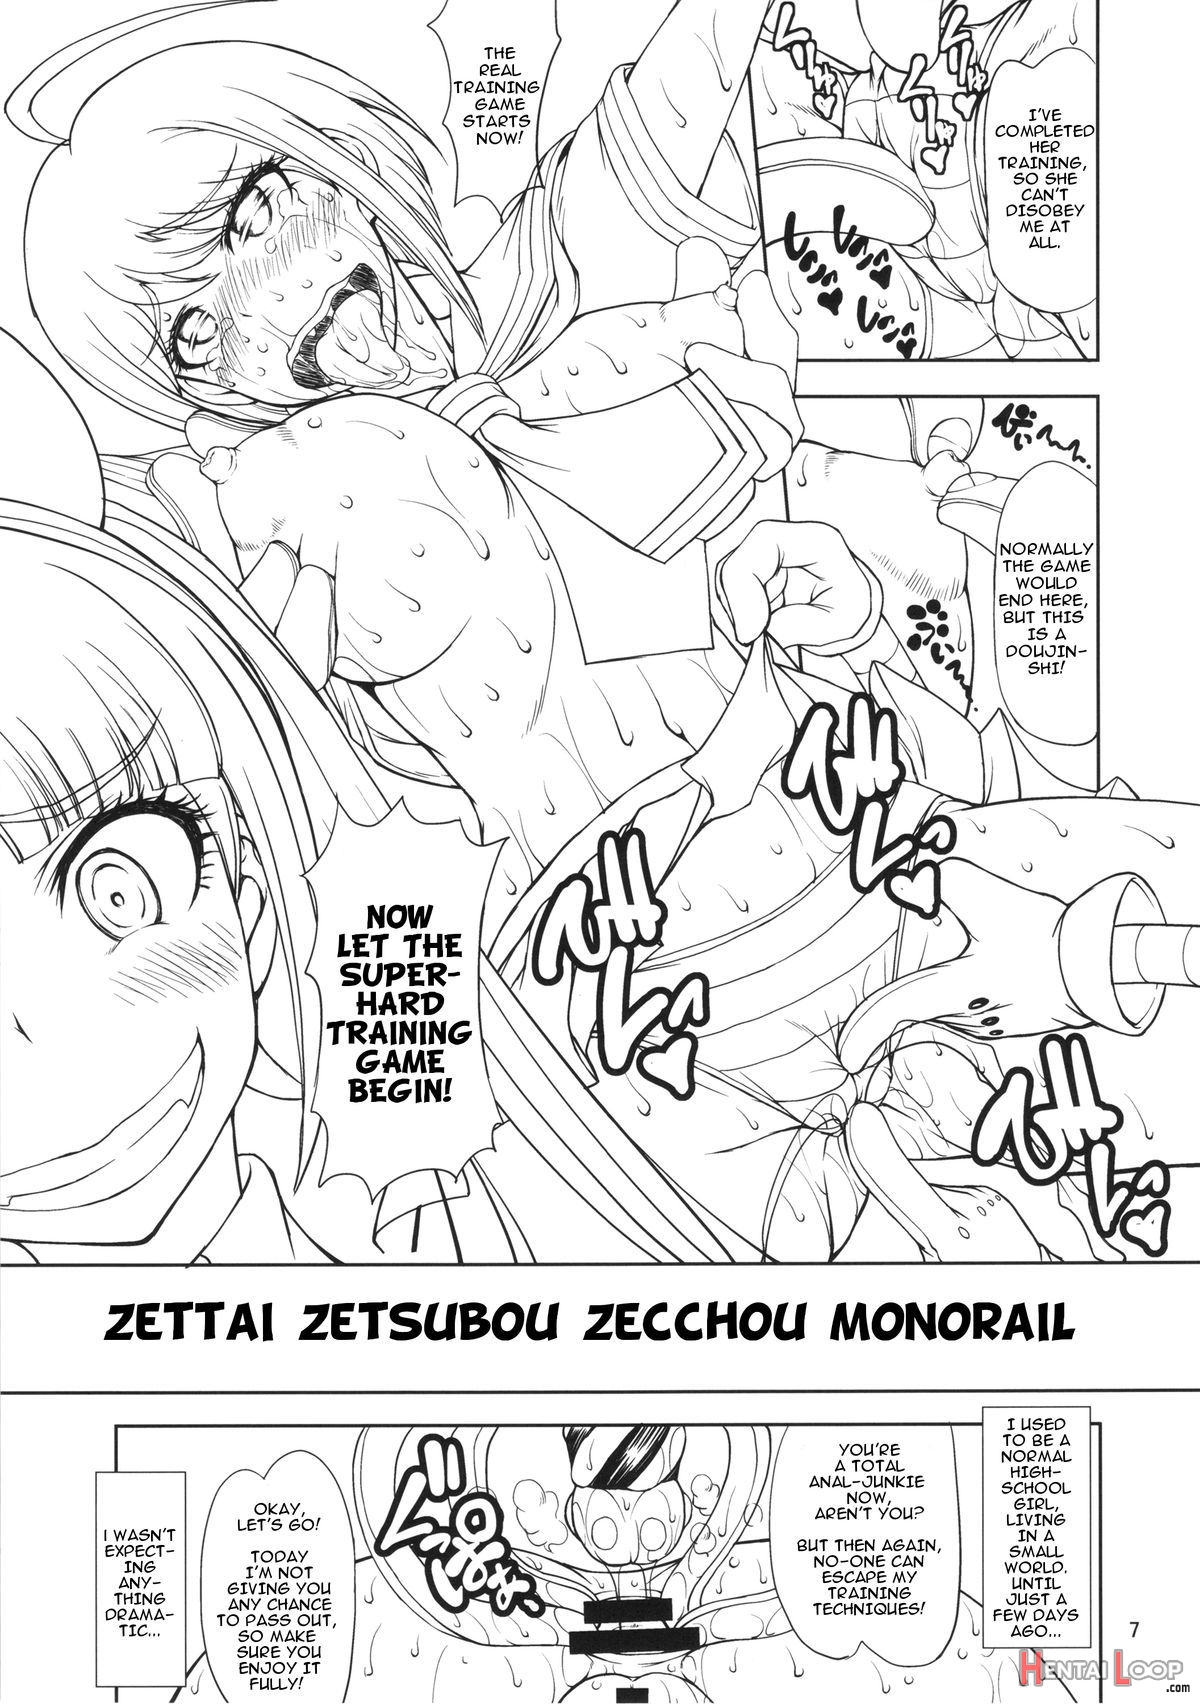 Zettai Zetsubou Zecchou Monorail page 6